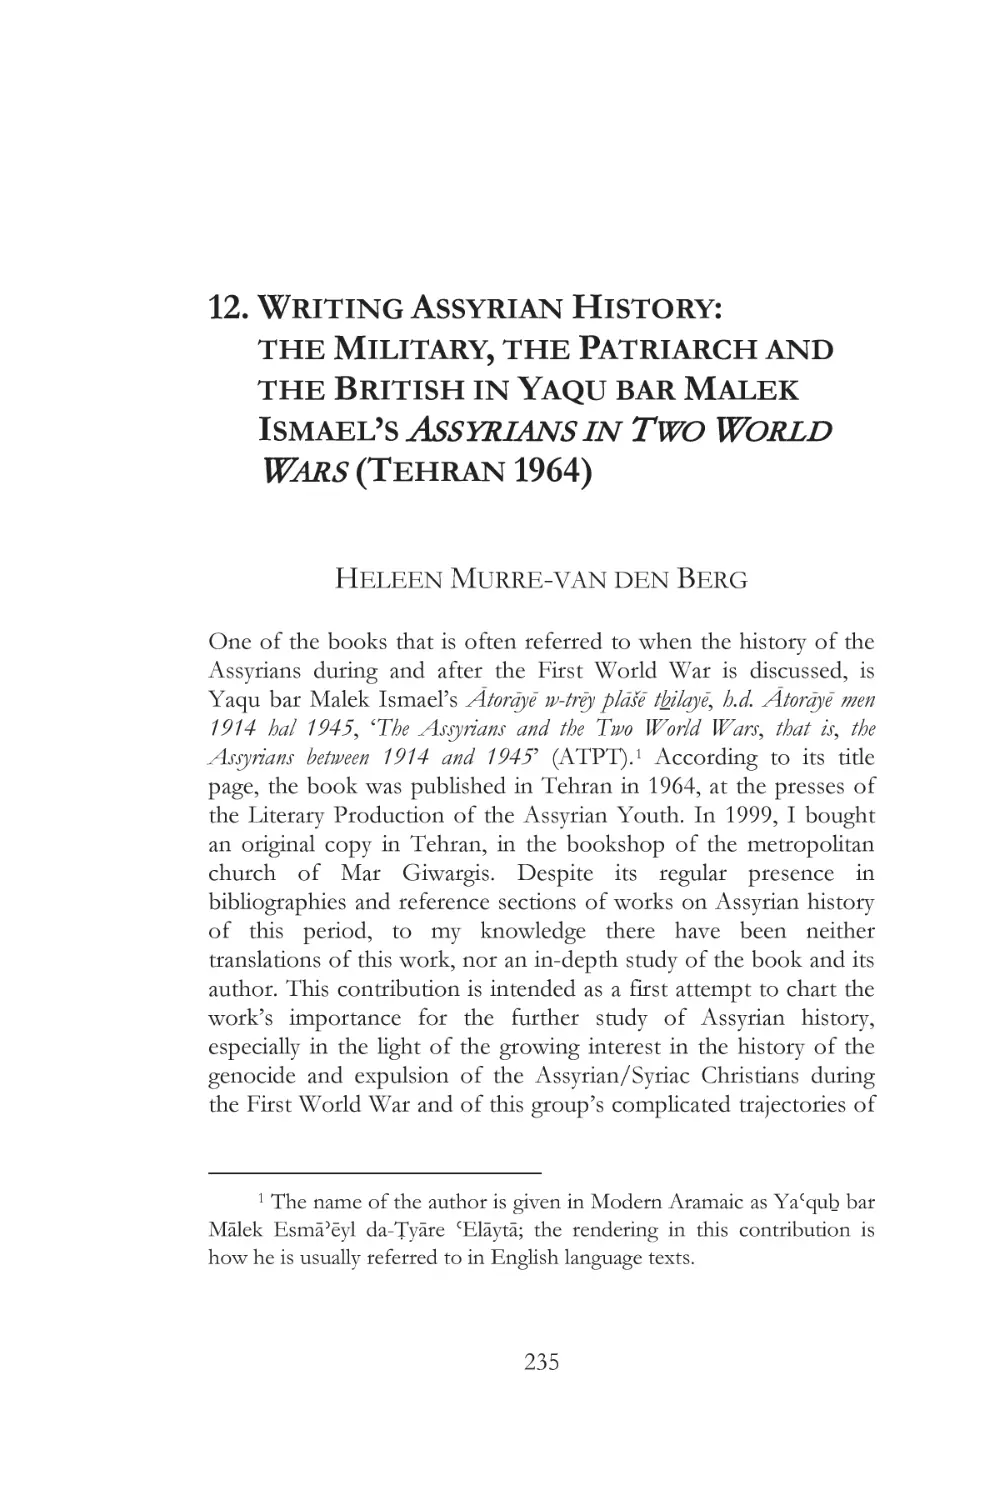 III. POST-SAYFO PERIOD
12. WRITING ASSYRIAN HISTORY